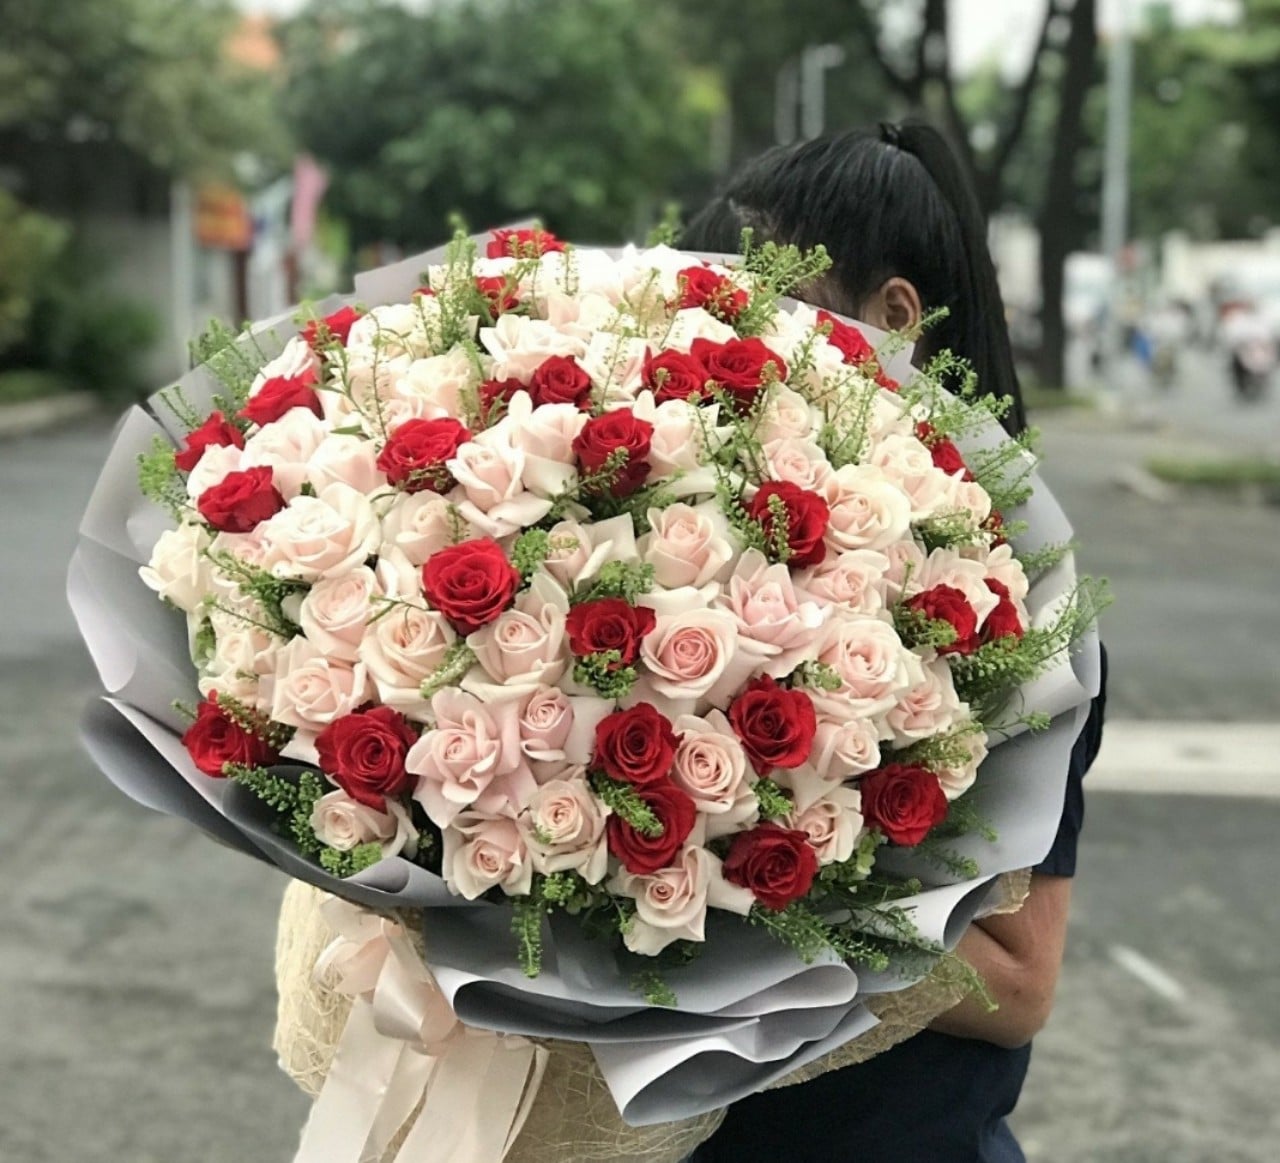 Shop hoa tươi Biên Hòa